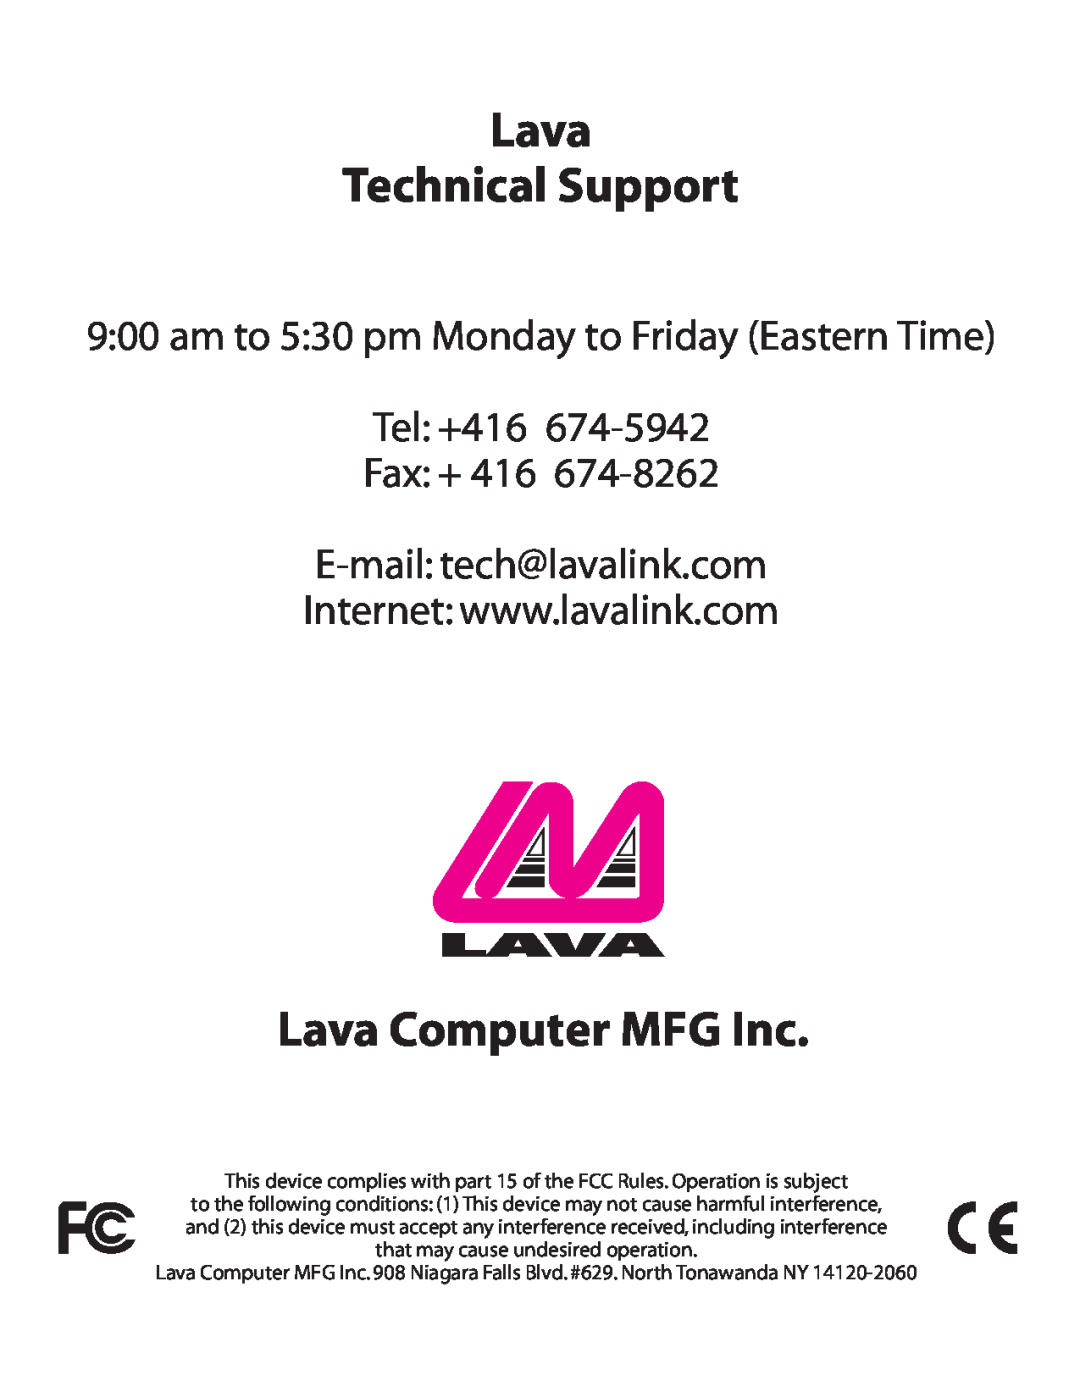 Lava Computer SP-PCI installation manual Lava Technical Support, Lava Computer MFG Inc, E-mail tech@lavalink.com 